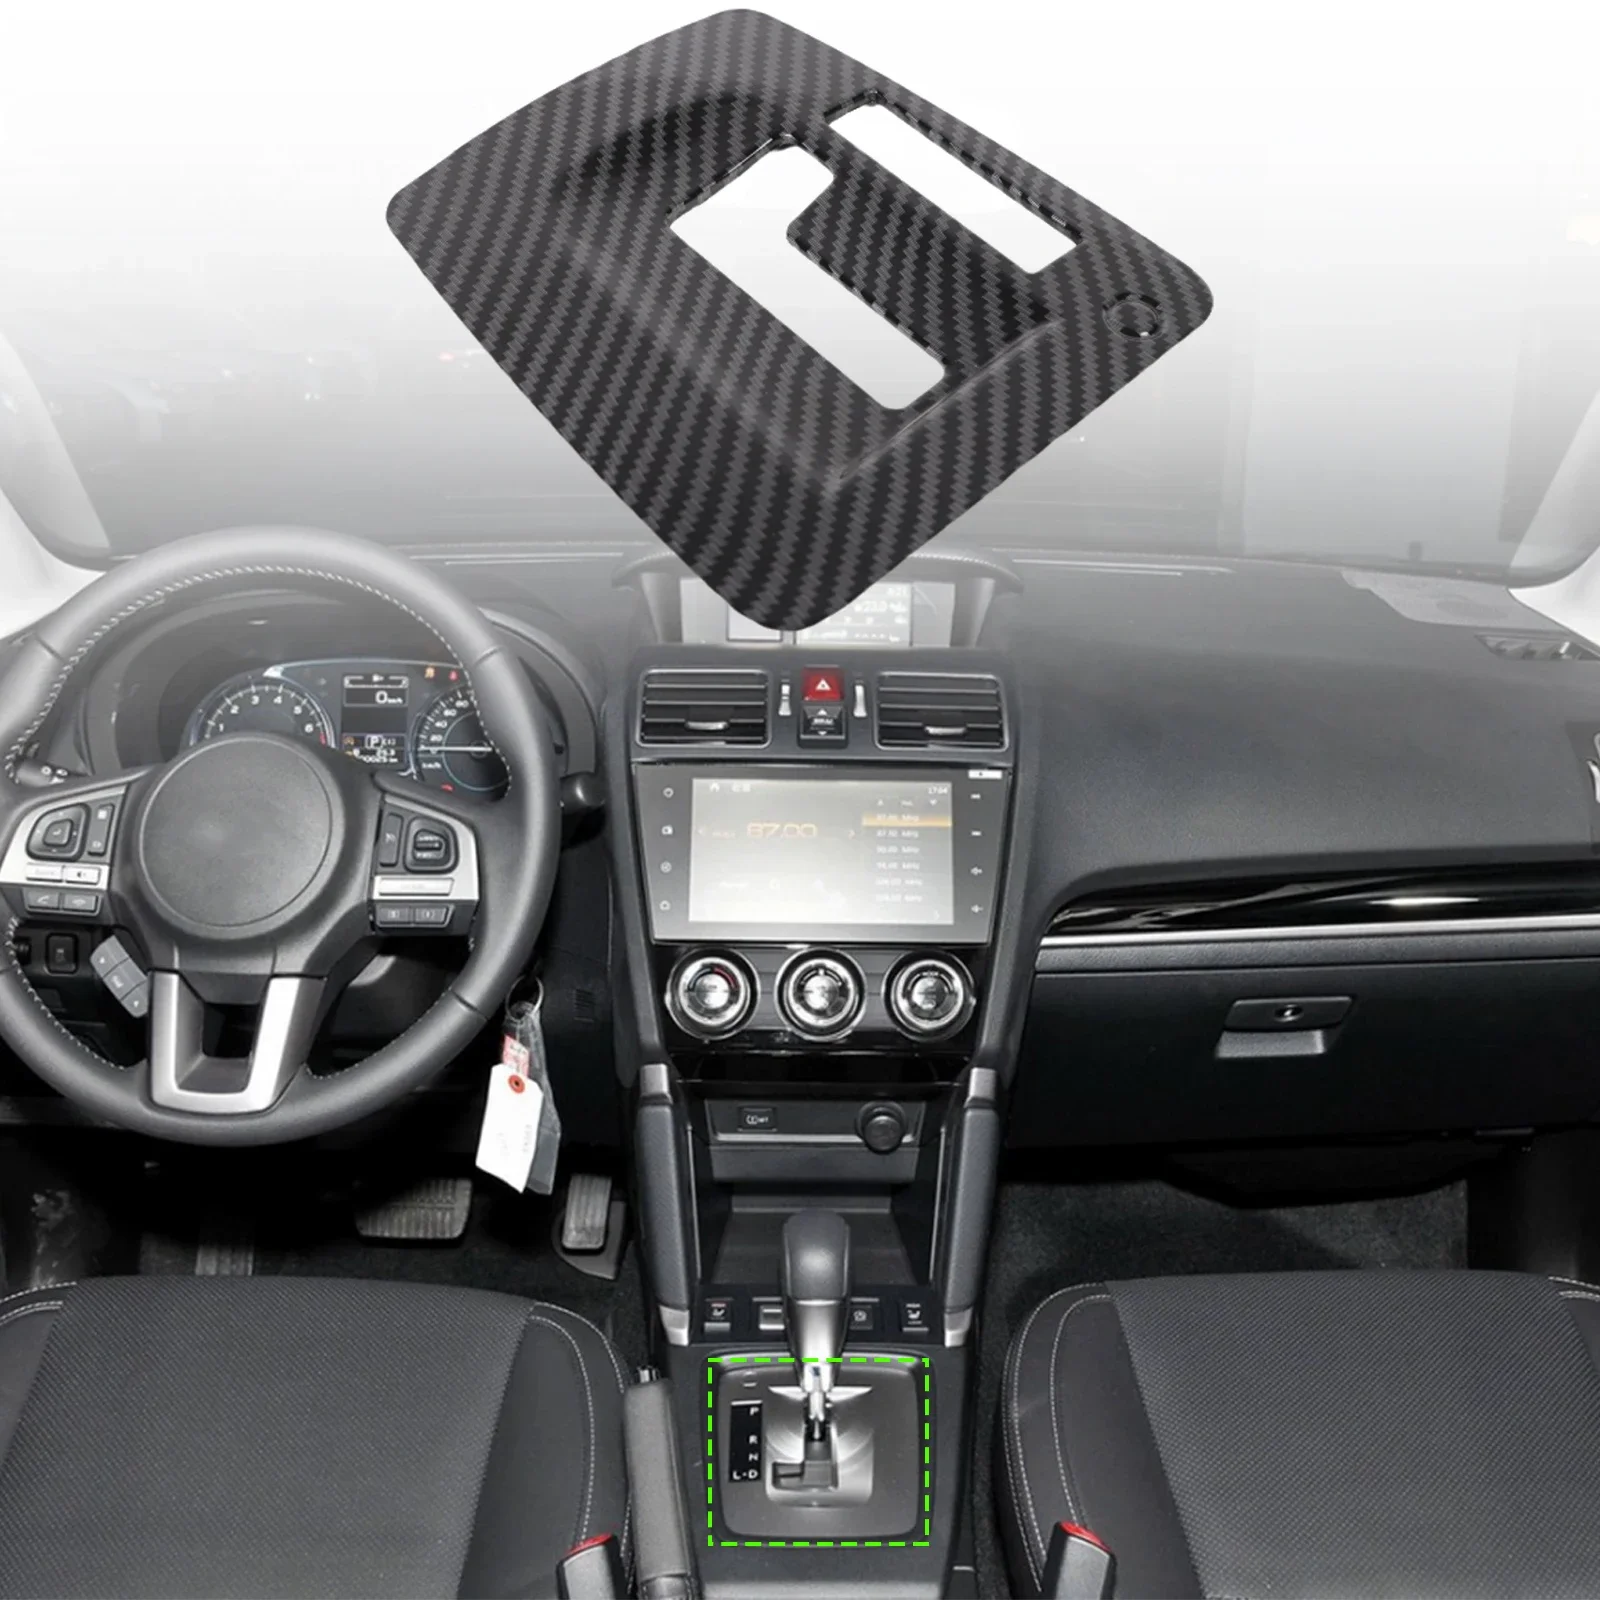 

For Subaru Forester 2013-2018 ABS Carbon Fiber Car Gear Shift Panel Cover Trim Sticker Car Accessories LHD